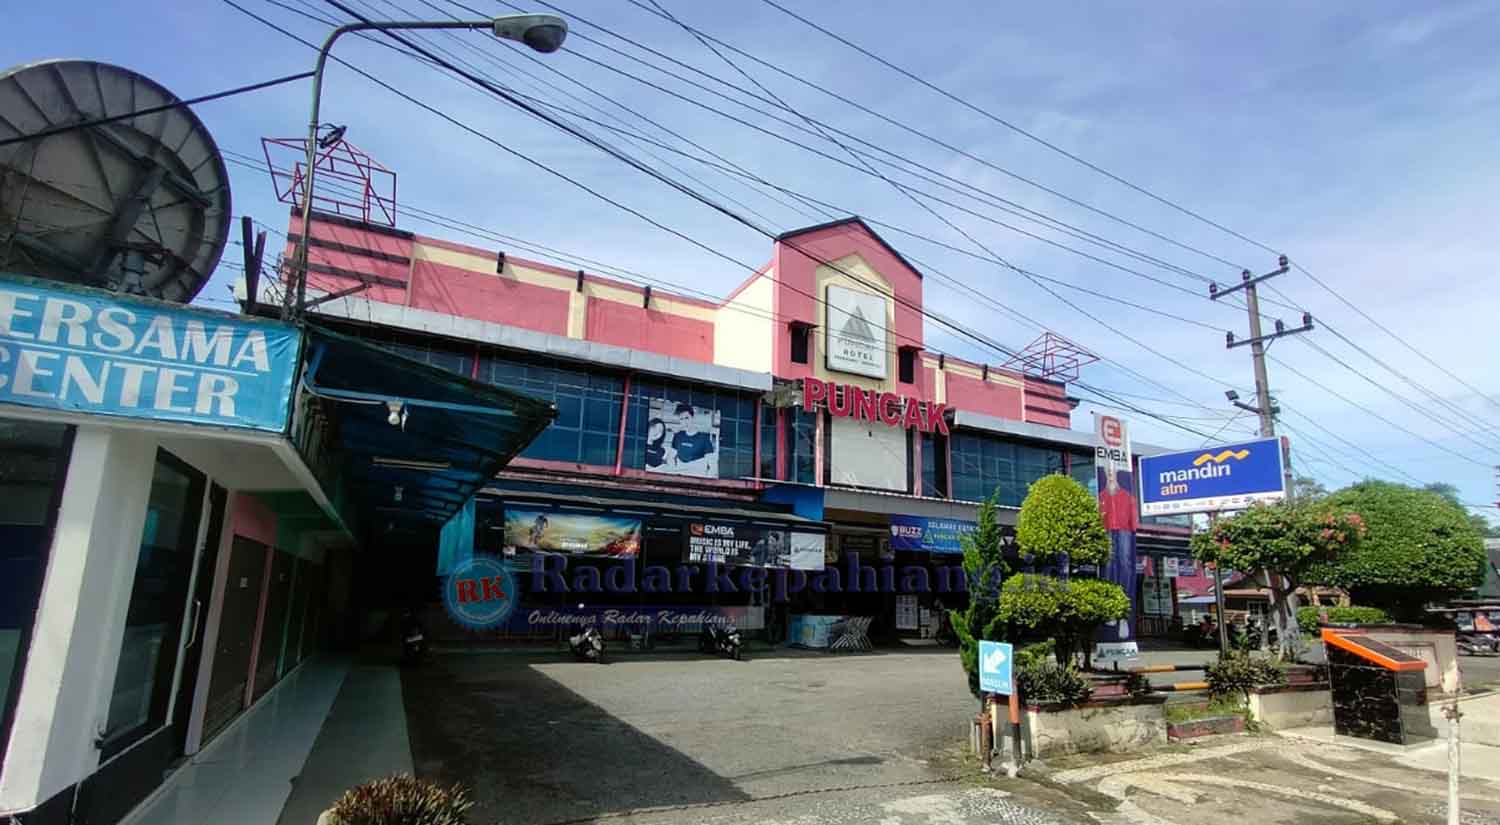 Terkait Kerja Sama, Manajemen Puncak Mall Setuju Negosiasi Ulang Bersama Pemkab Kepahiang